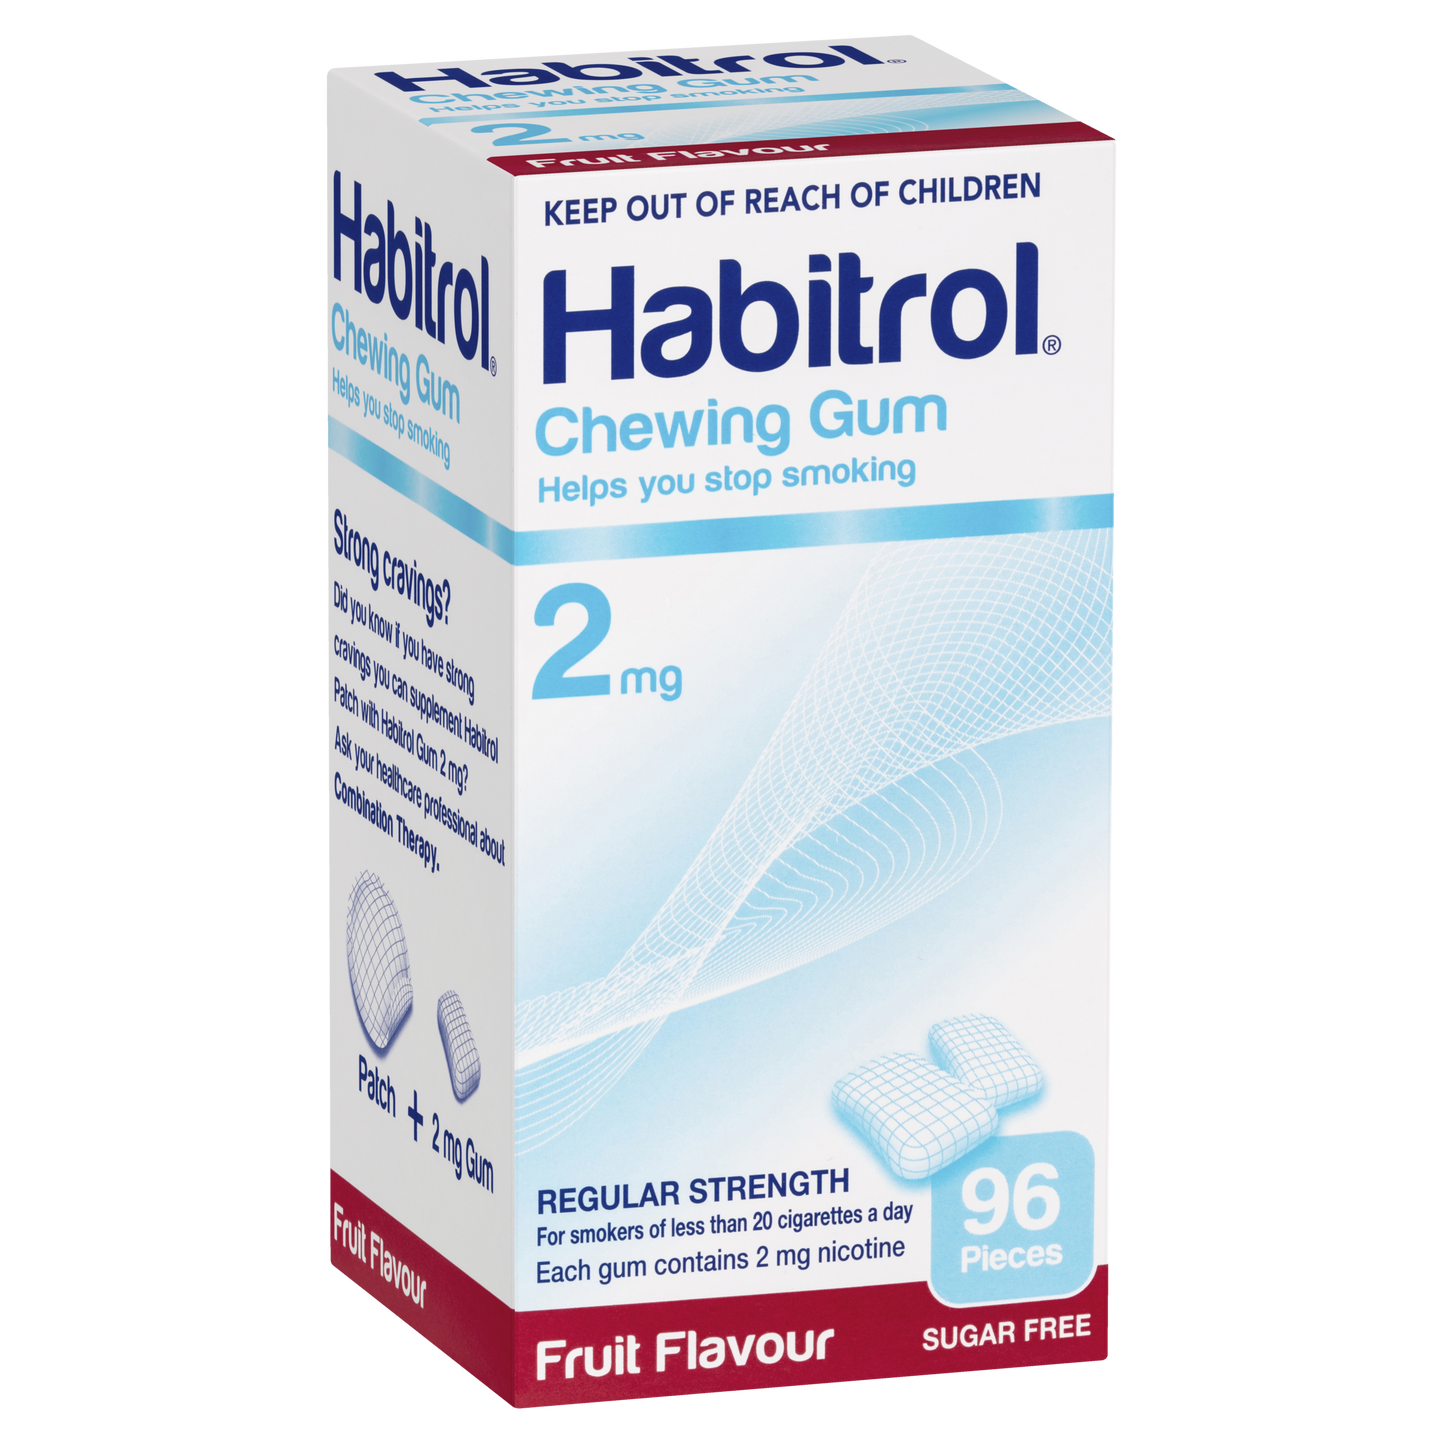 Habitrol Chewing Gum 2mg - Fruit